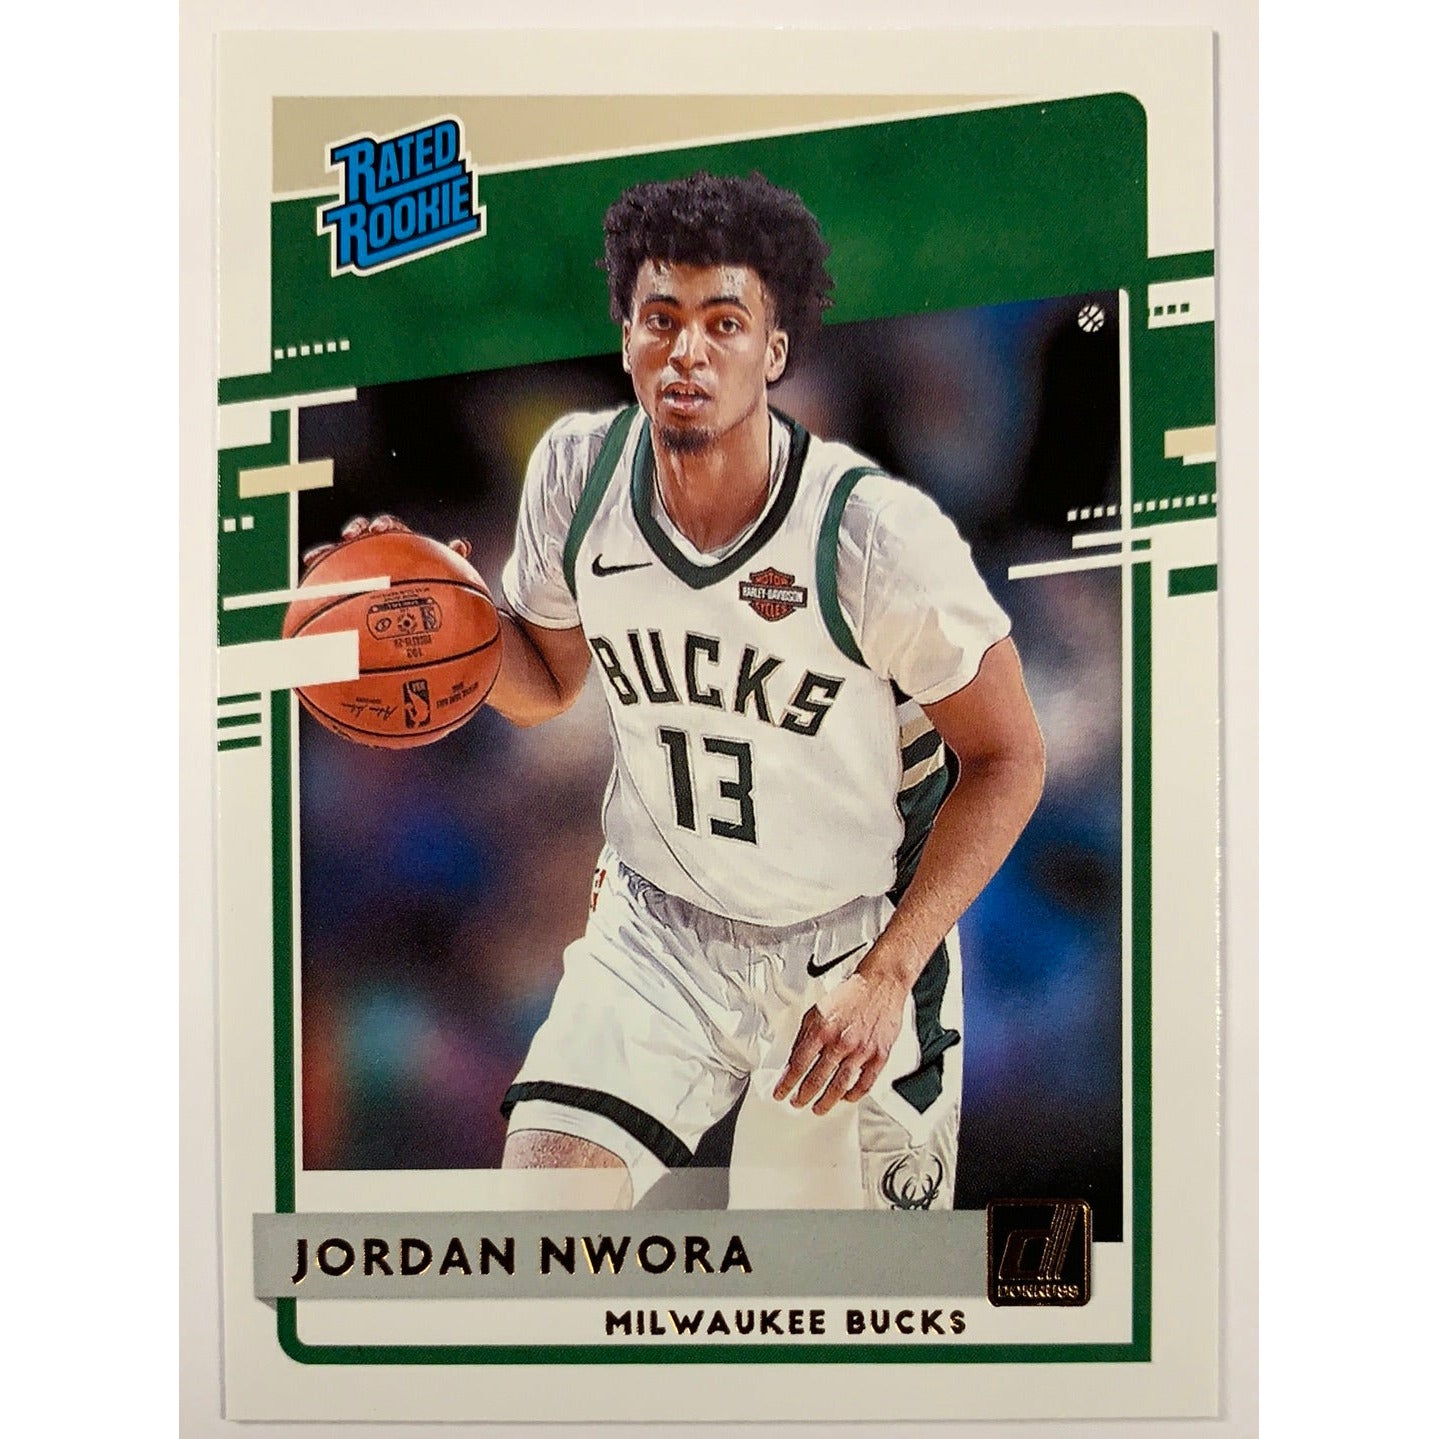  2020-21 Donruss Jordan Nwora Rated Rookie  Local Legends Cards & Collectibles